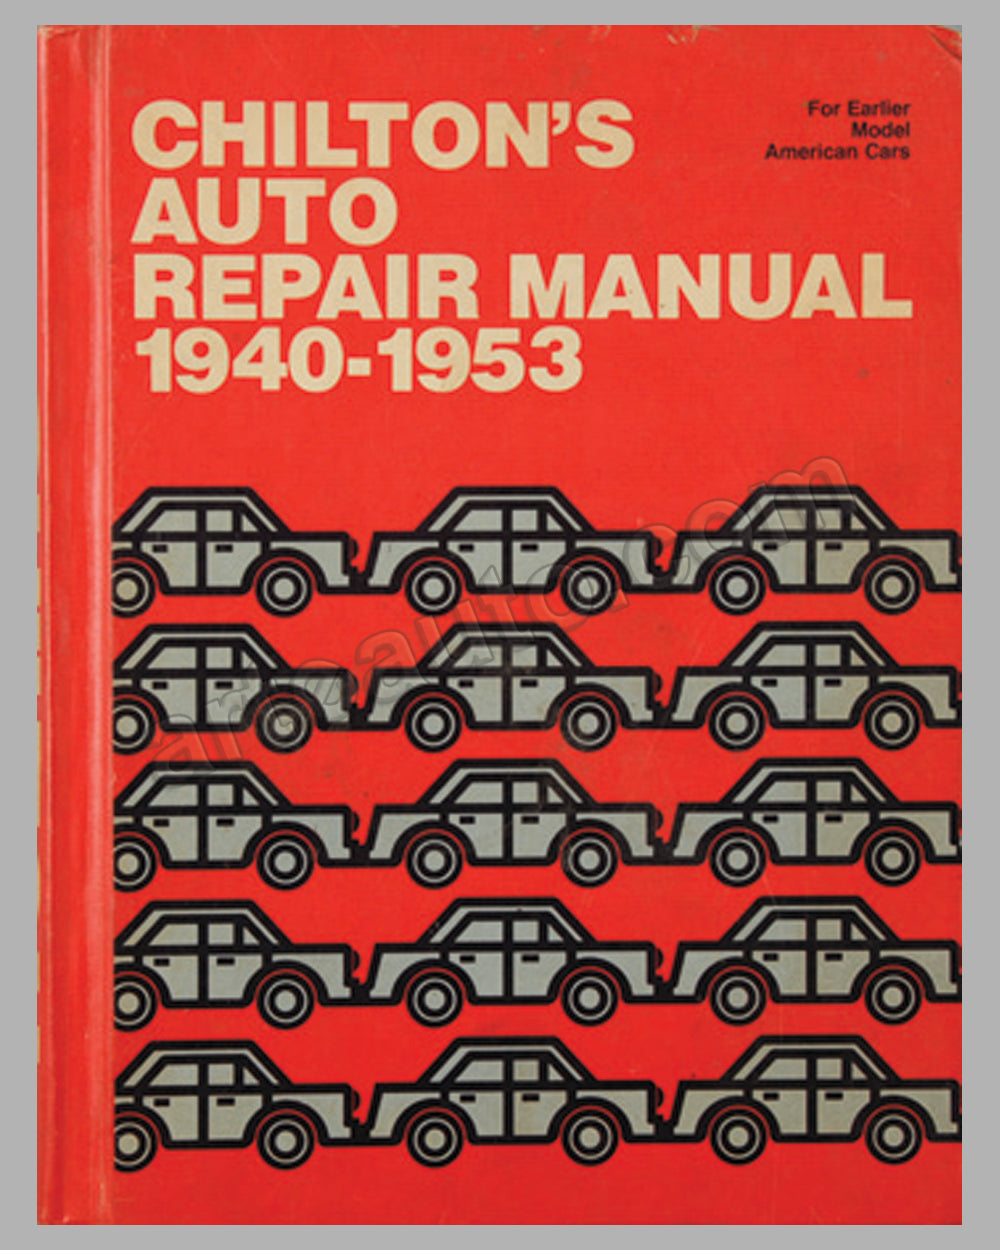 Chilton’s Auto Repair Manual 1940-1953